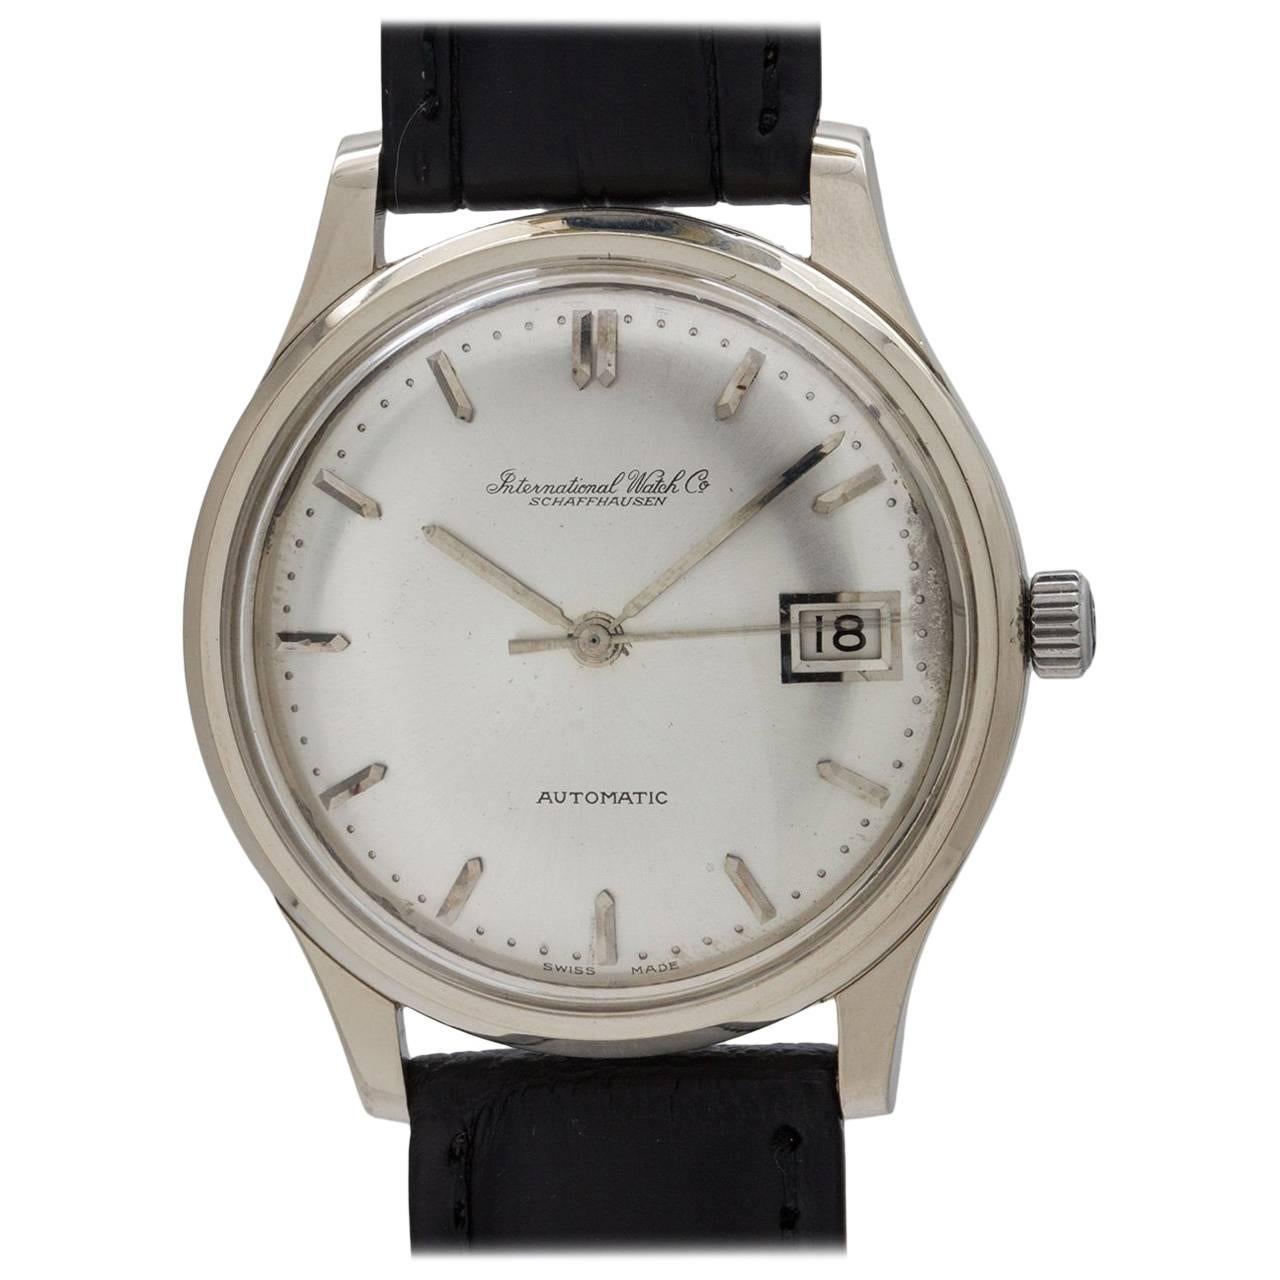 IWC Schaffhausen White Gold Date Automatic Wristwatch, circa 1964